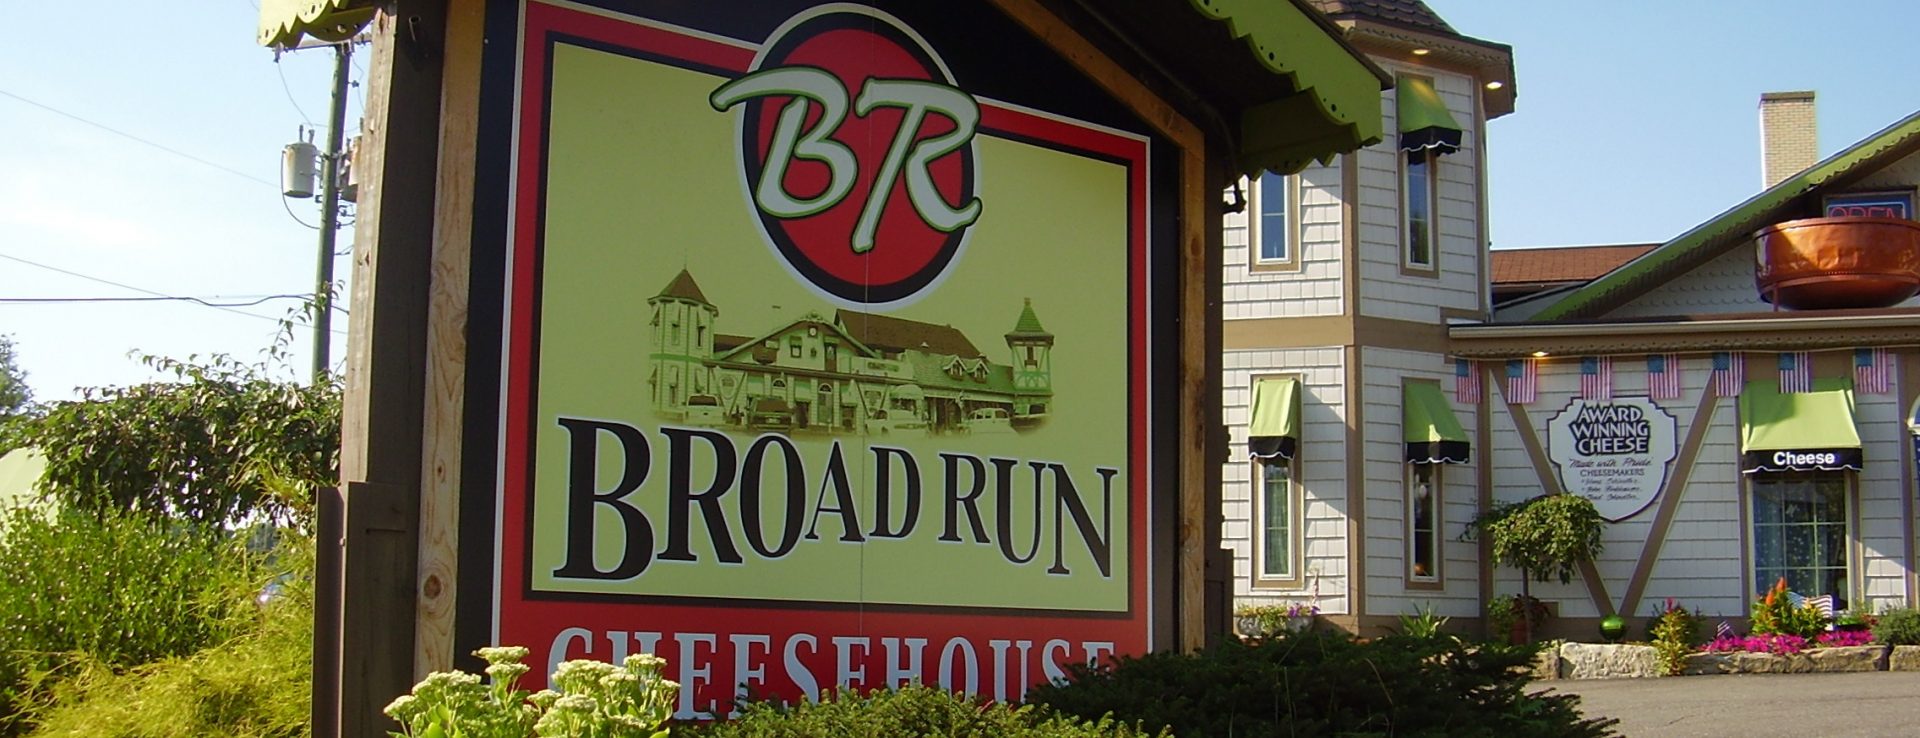 Broad Run Cheesehouse